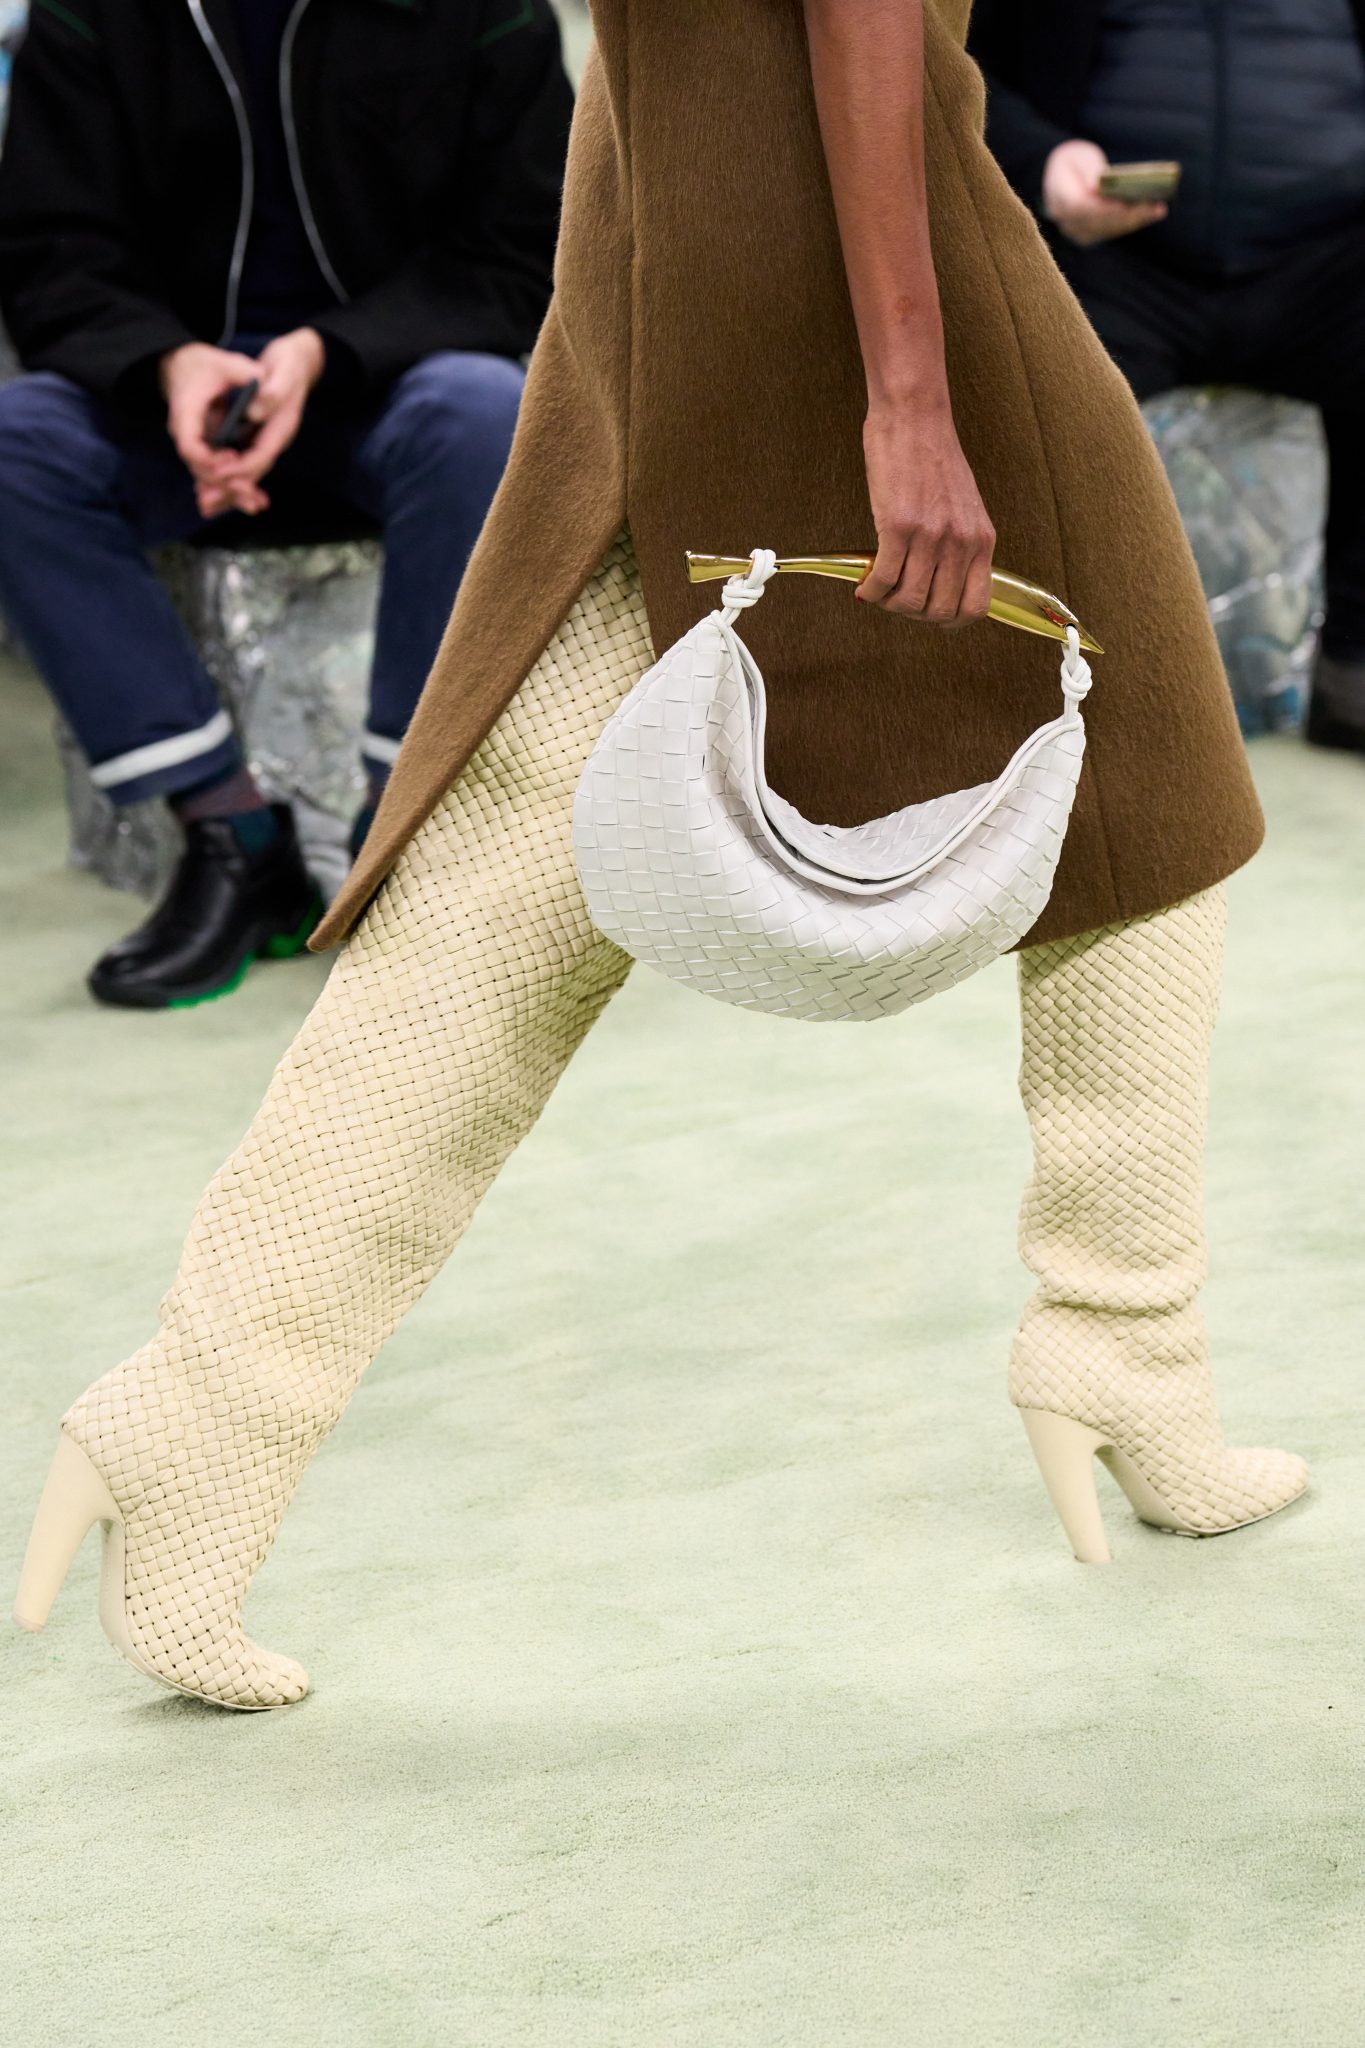 Bottega Veneta's Sardine Bag Is Becoming a Celebrity Go-To